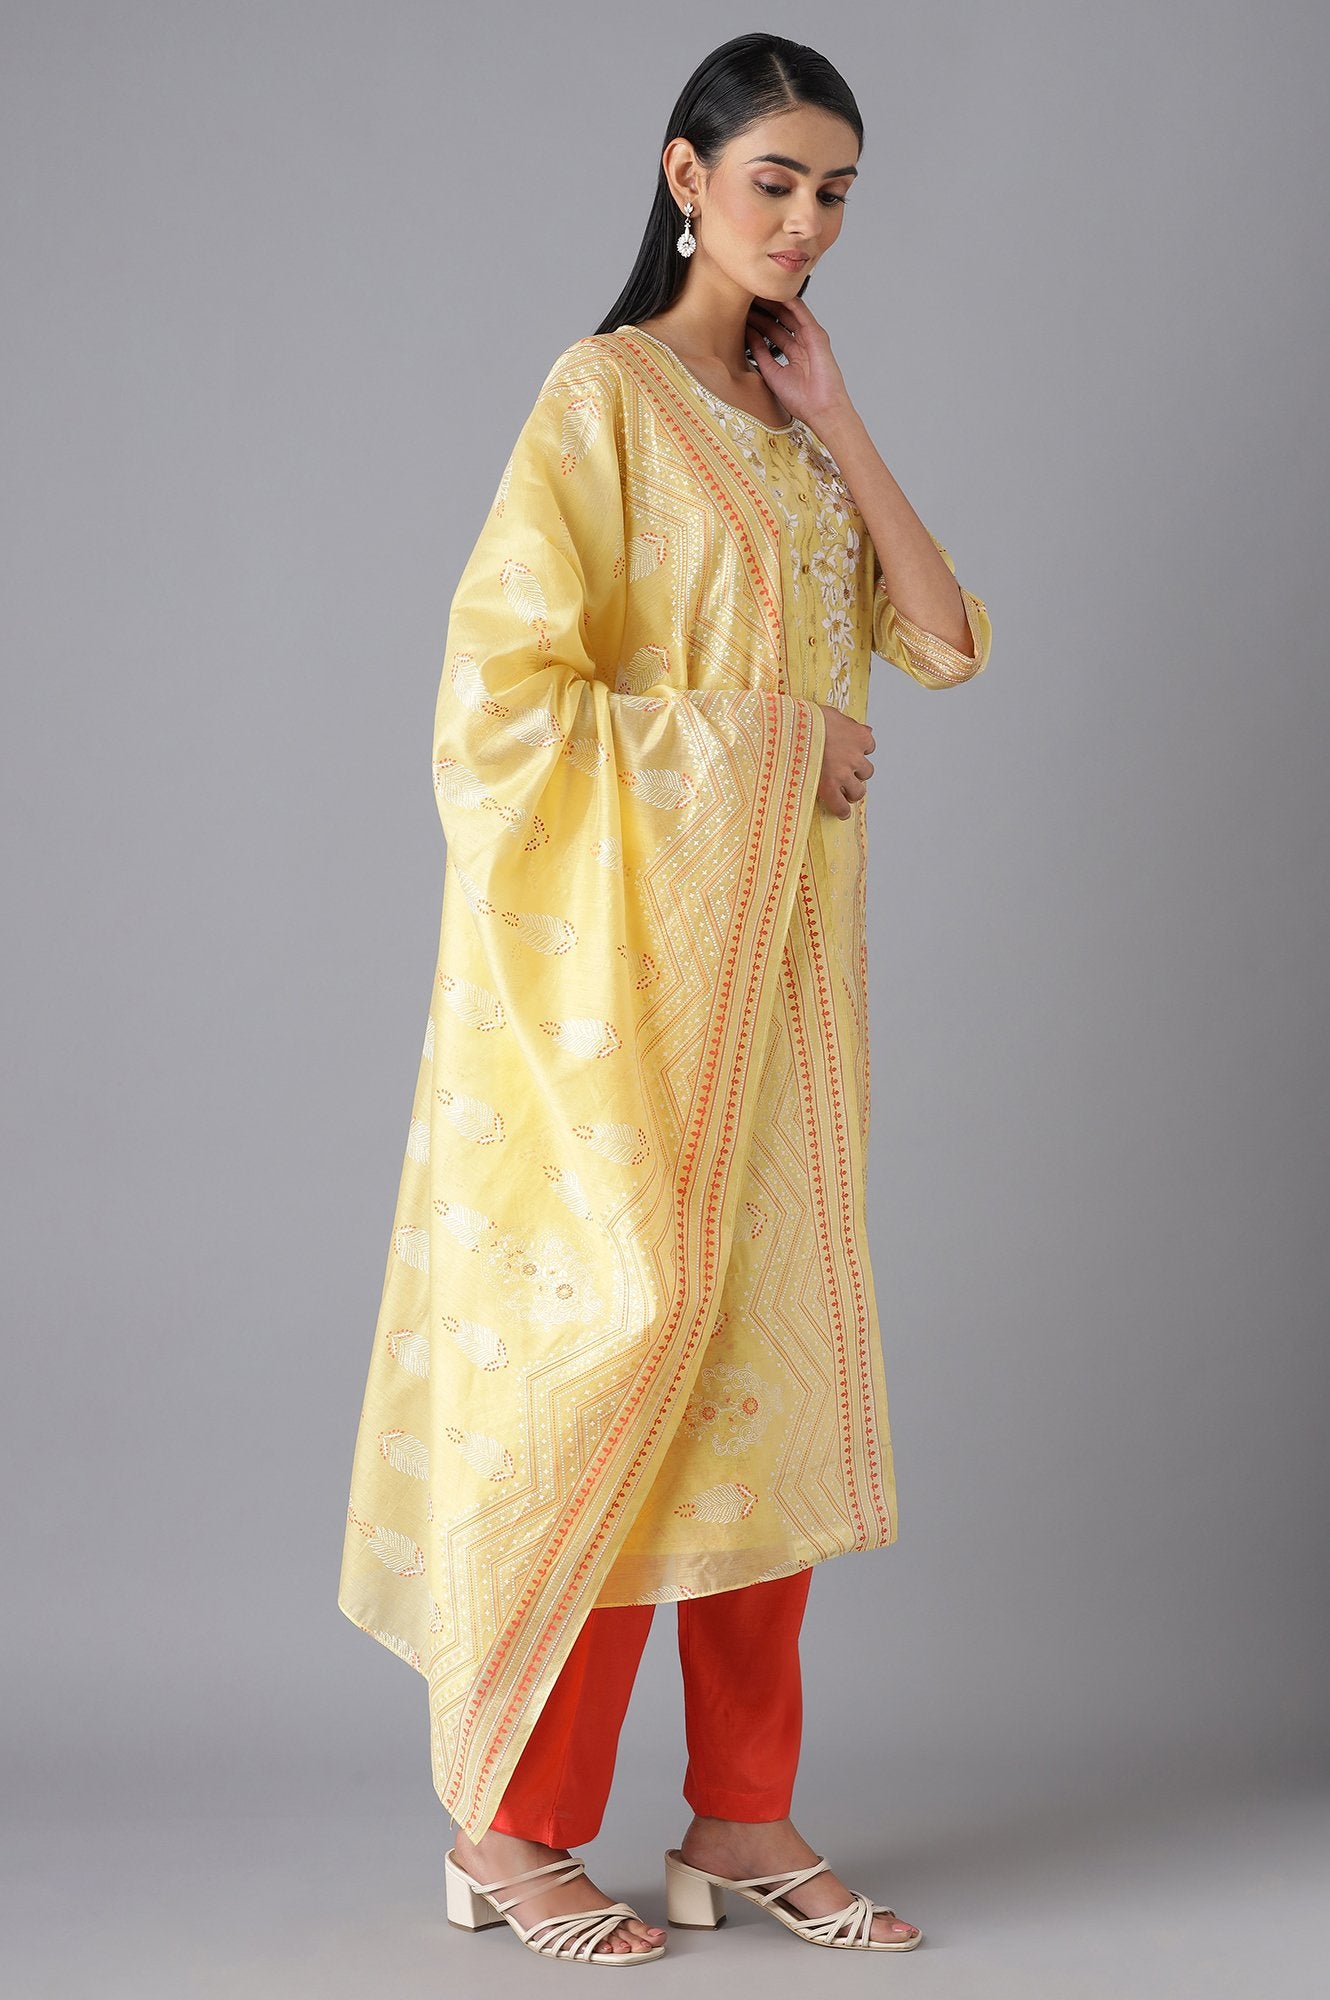 Yellow Printed kurta Orange Trousers and Dupatta Set